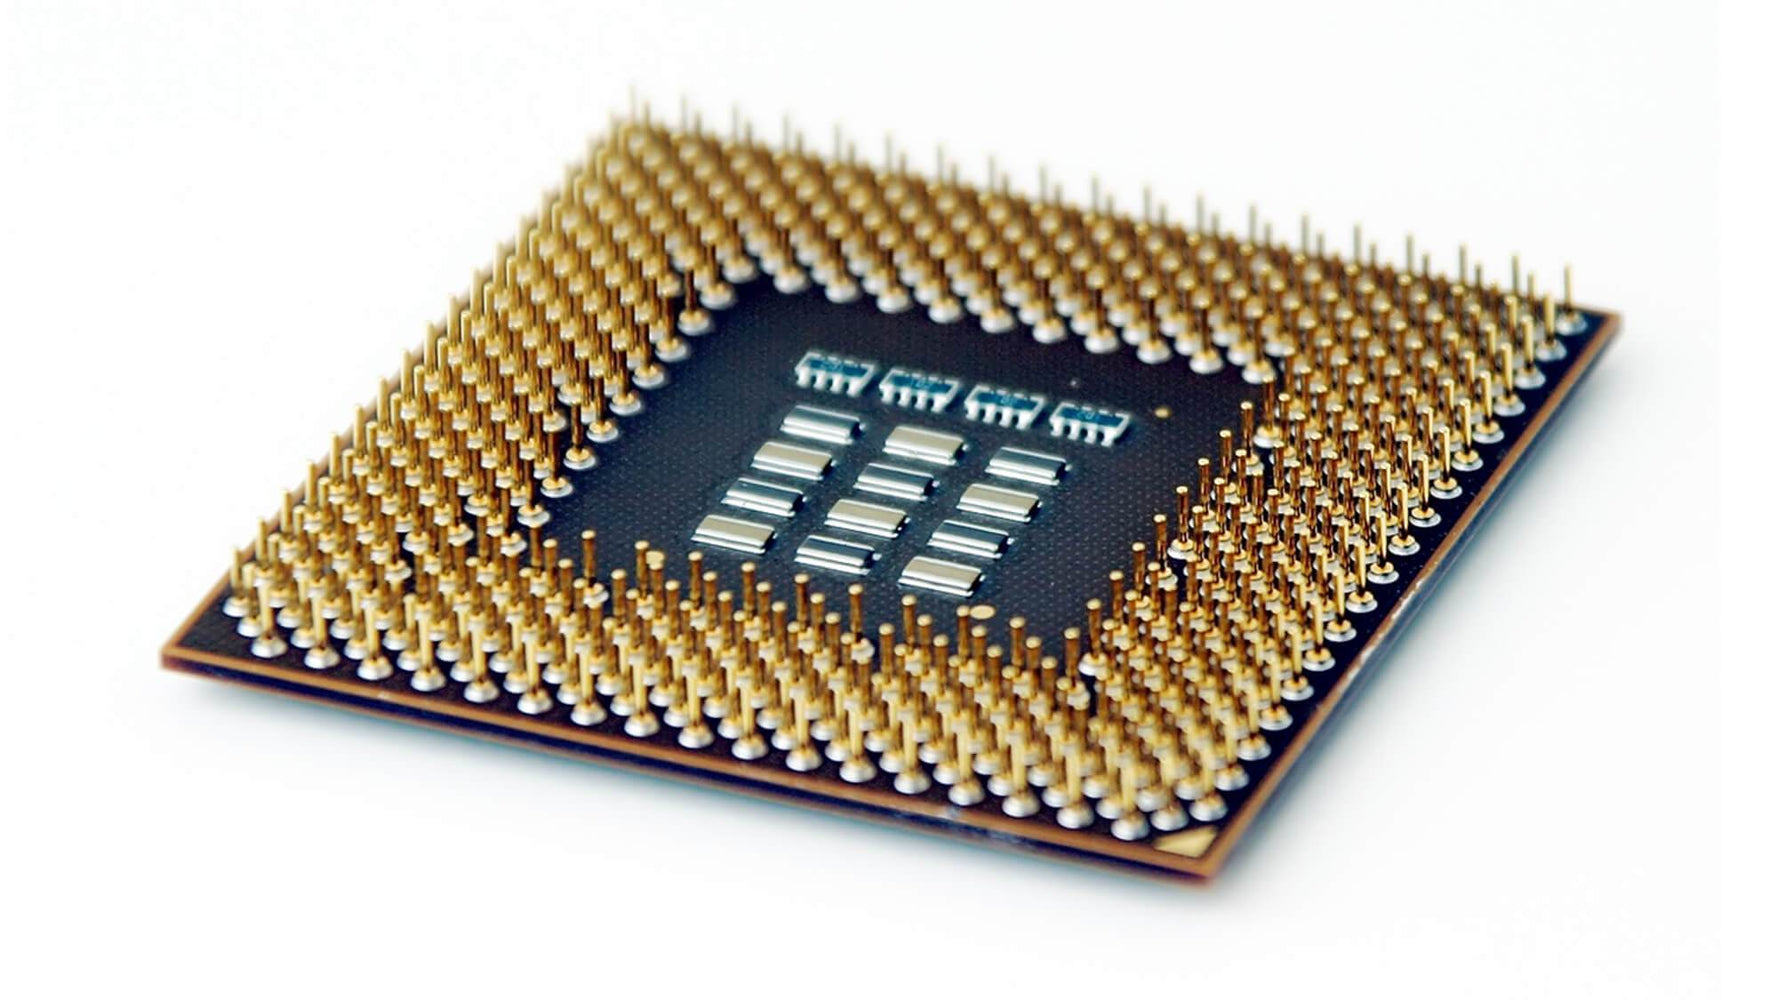 BX80621E54650 - Intel Xeon 8 Core E5-4650 2.7GHz 20MB SMART Cache 8GT/S QPI Socket FCLGA-2011 32NM 130W Processor